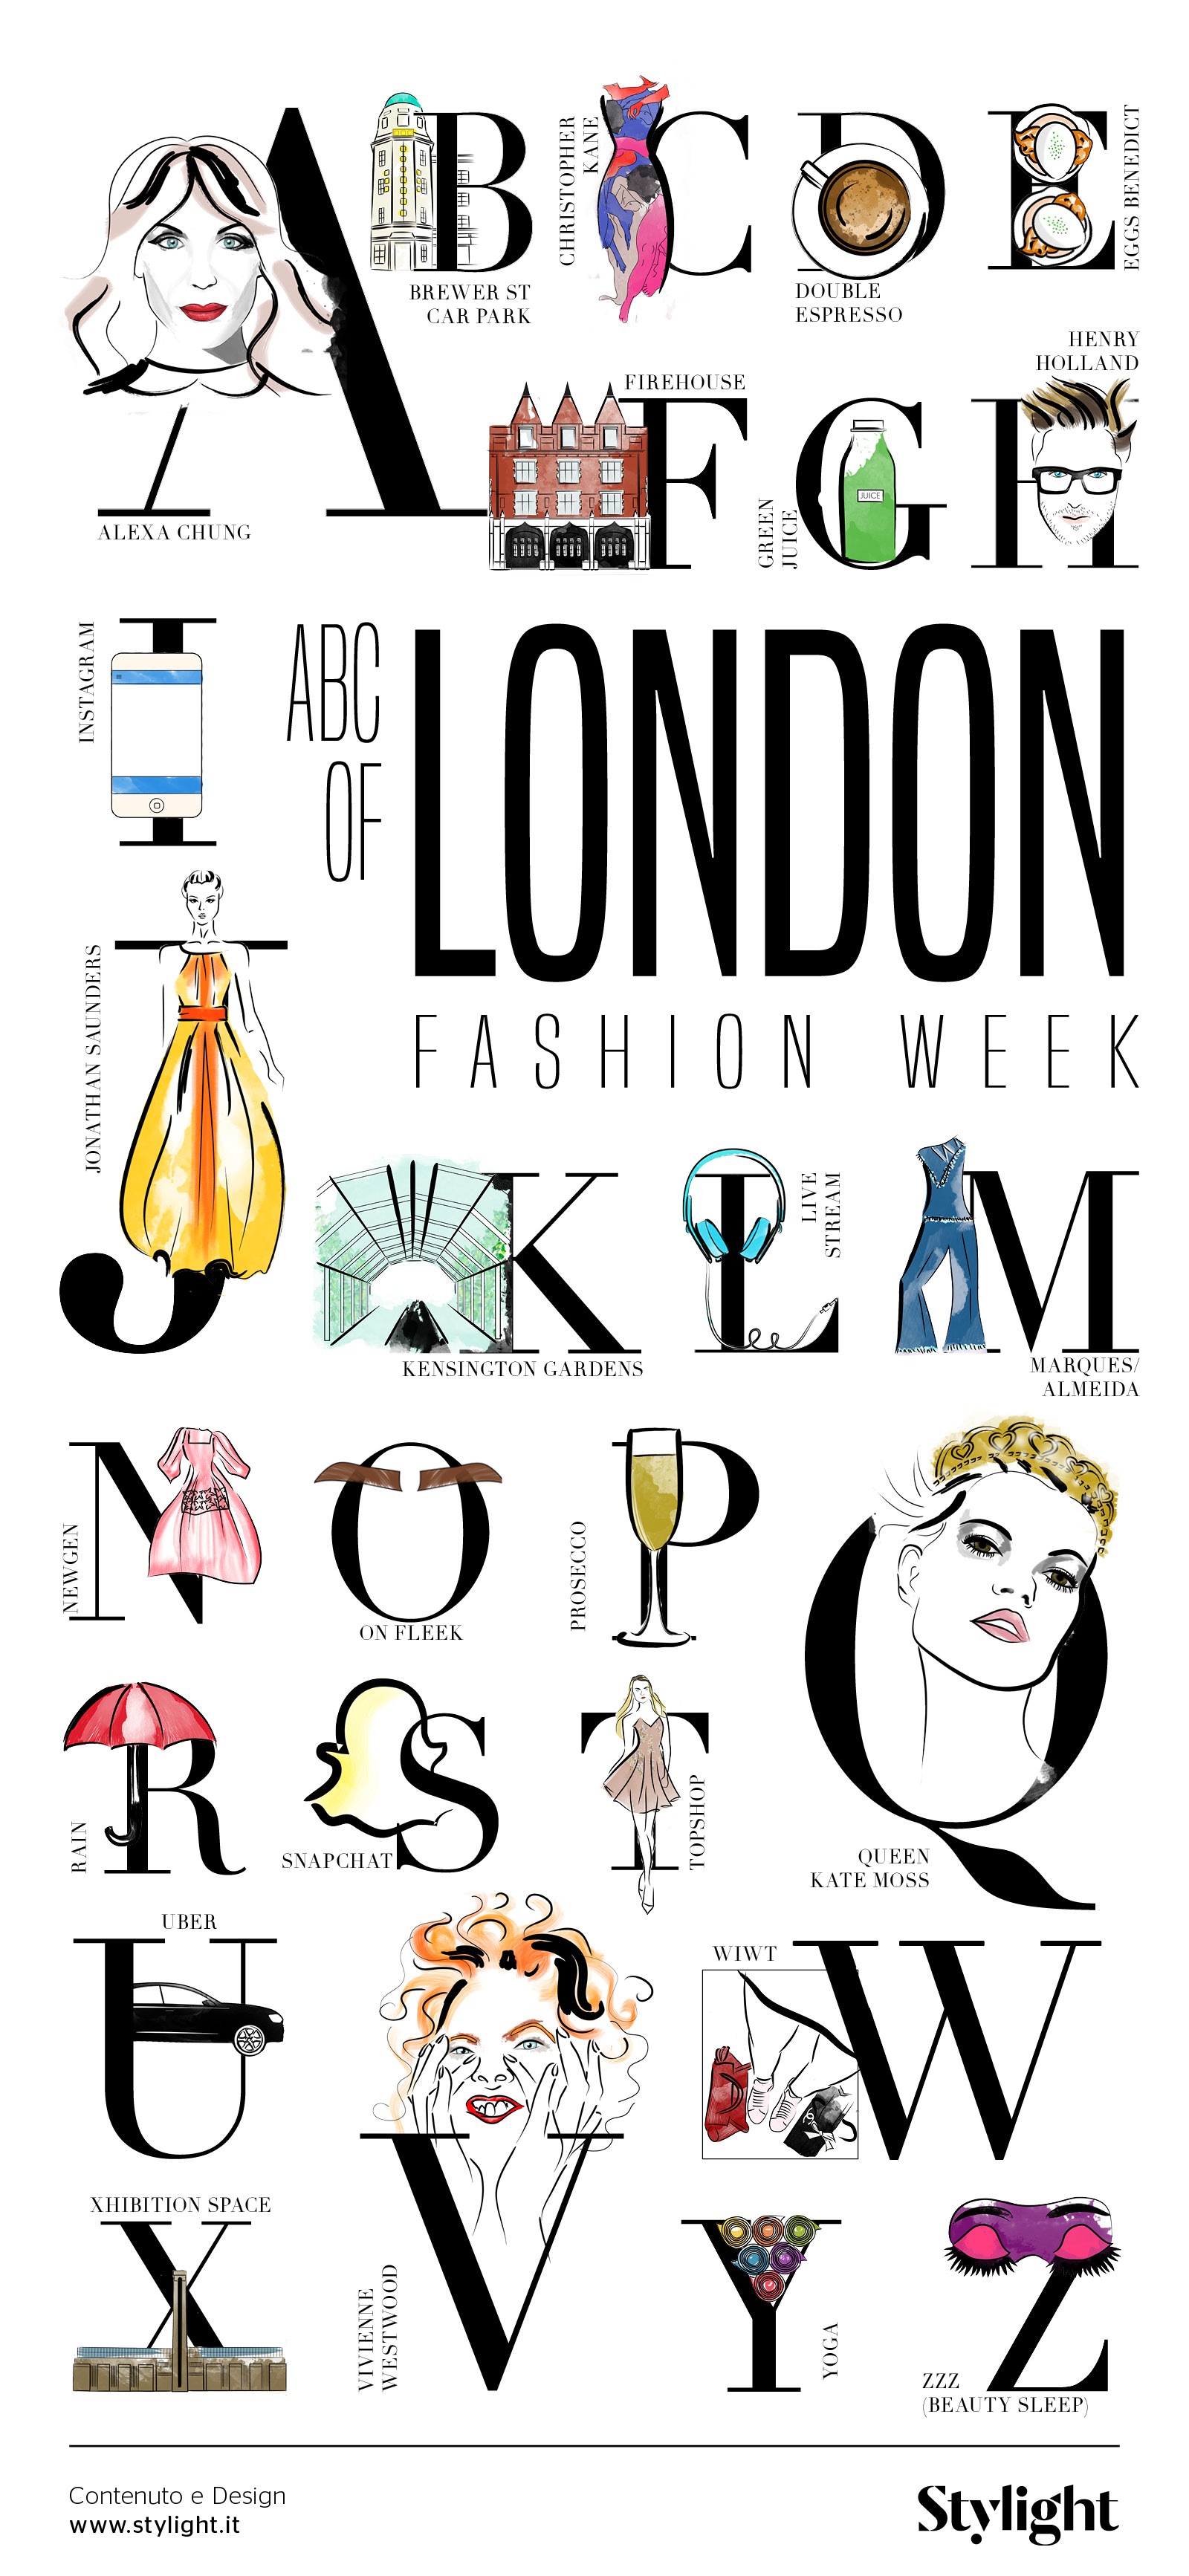 Infografica_ABC_London Fashion Week - Stylight